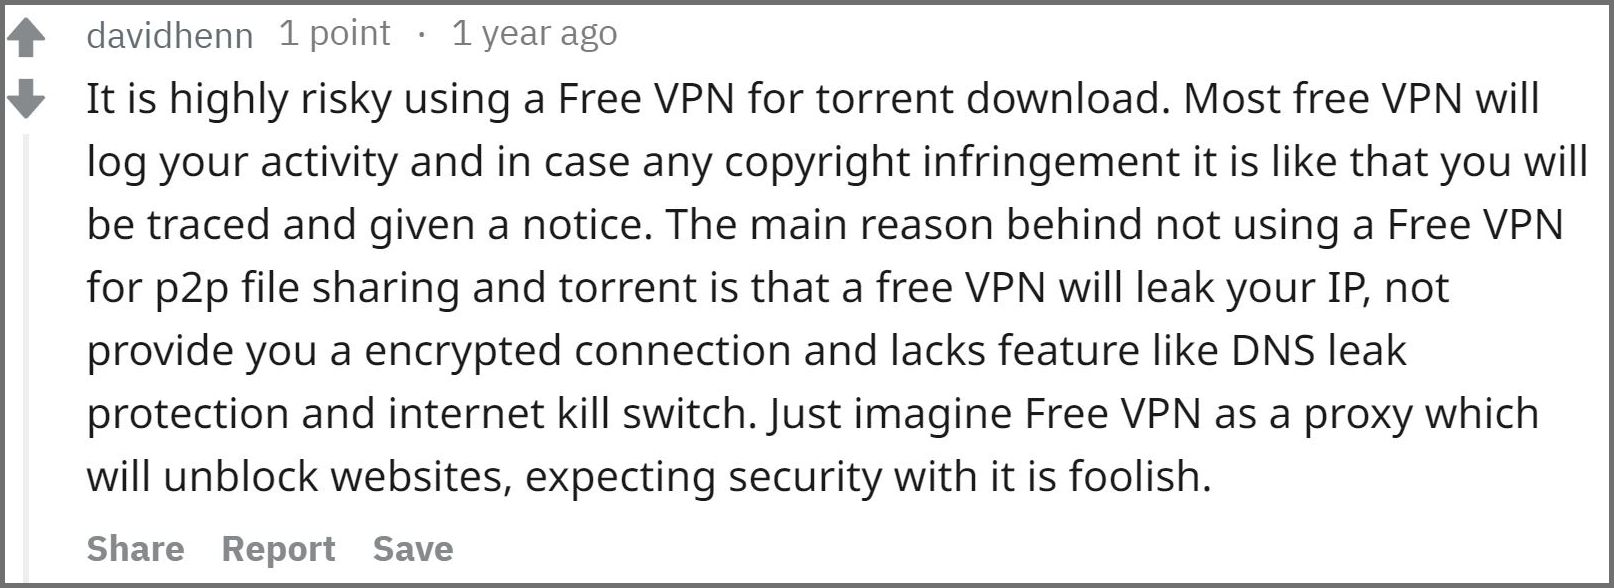 Do Not Use a Free VPN